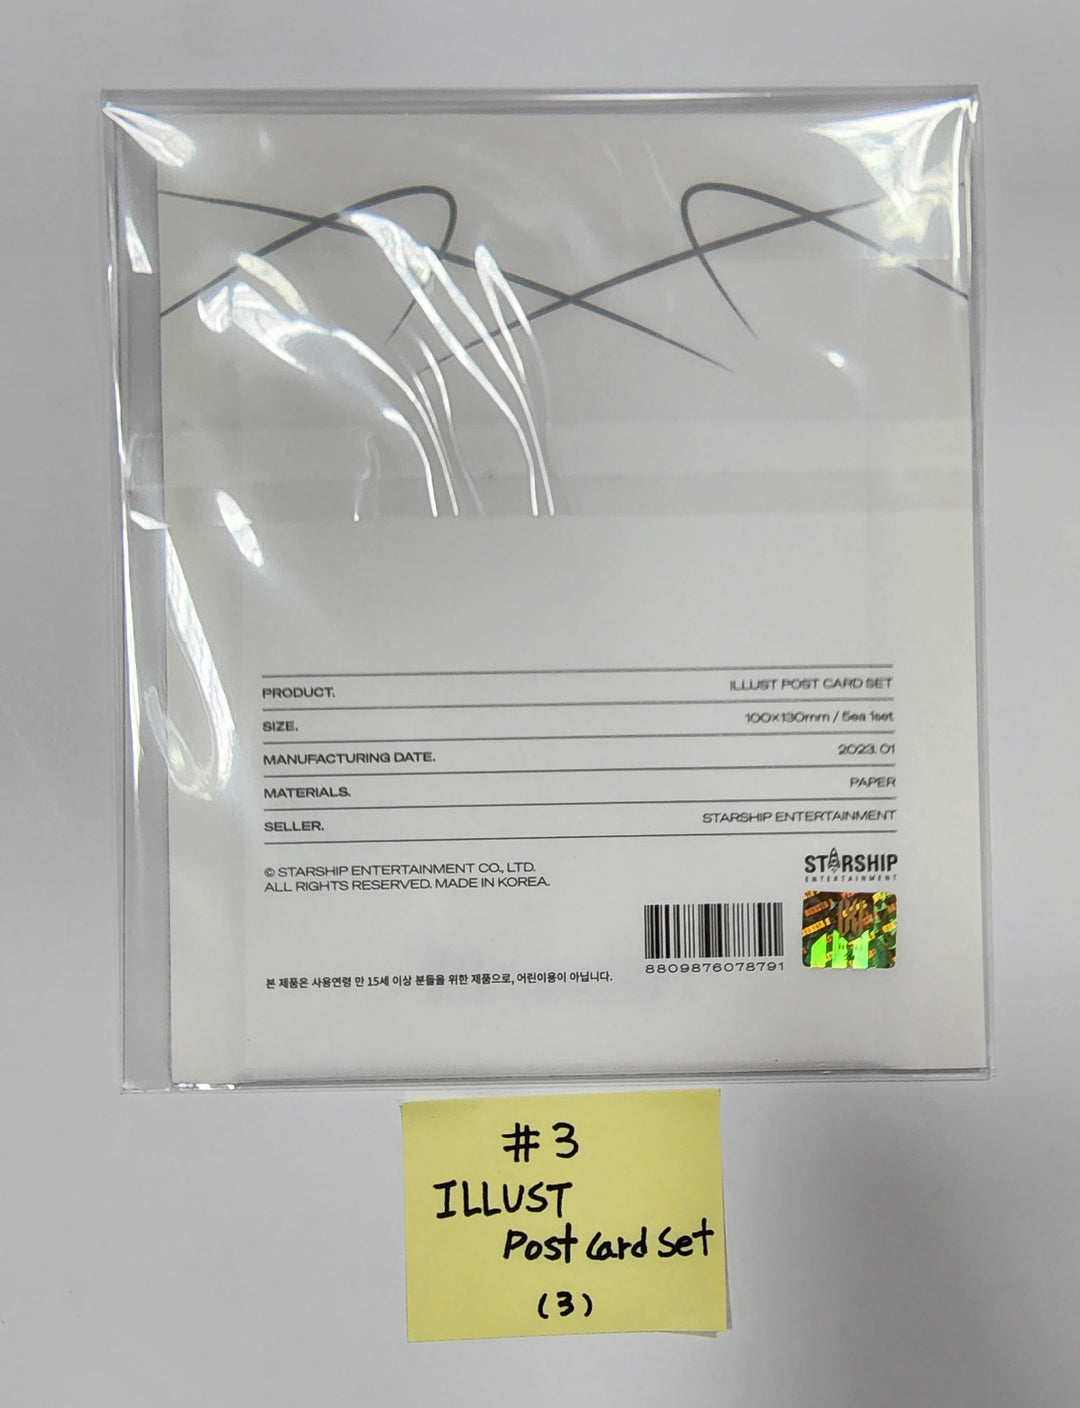 Monsta X “REASON” - Soundwave Pop-up store Official MD [Photocard set,postcard set, Photo Ticket, Mini Photobook]